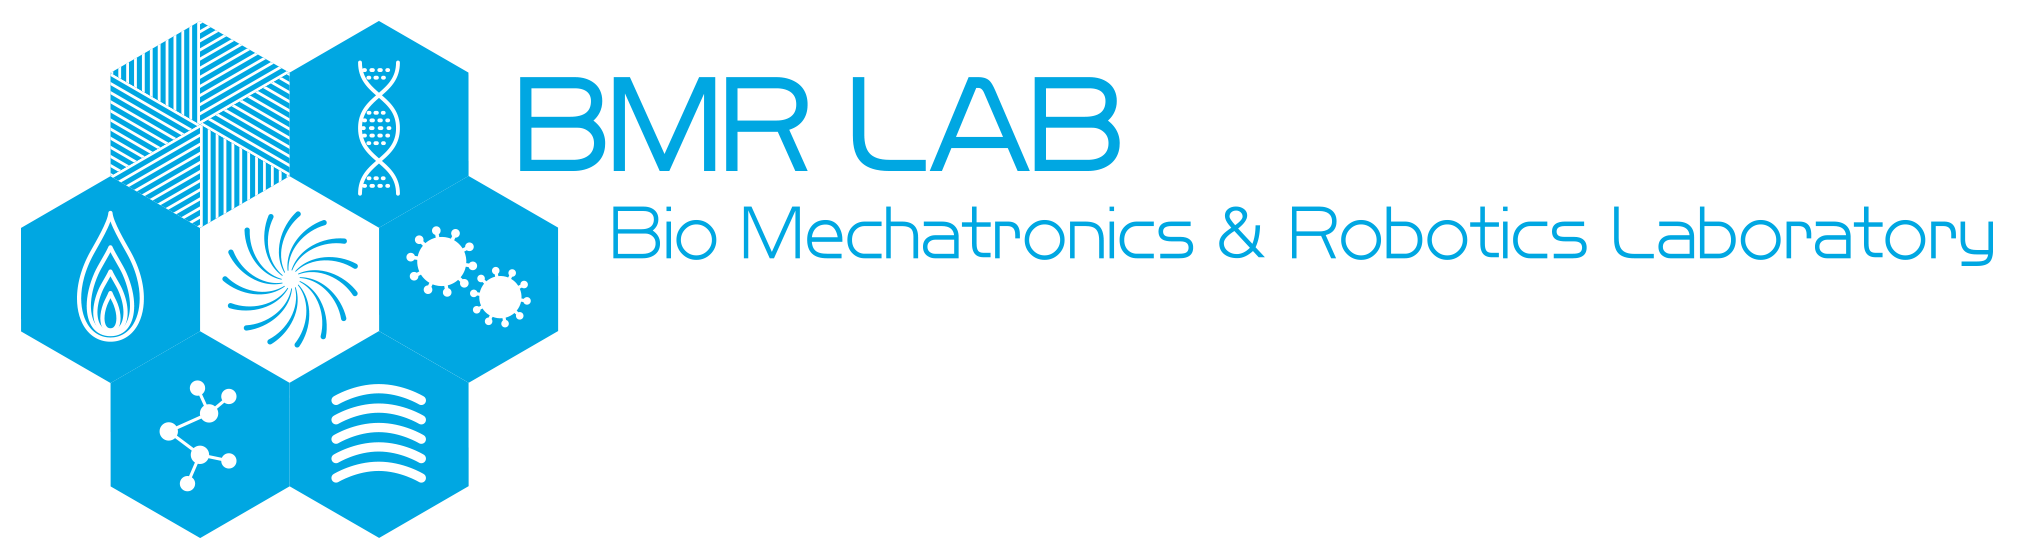 BMR LAB -Bio Mechatronics & Robotics Laboratory-